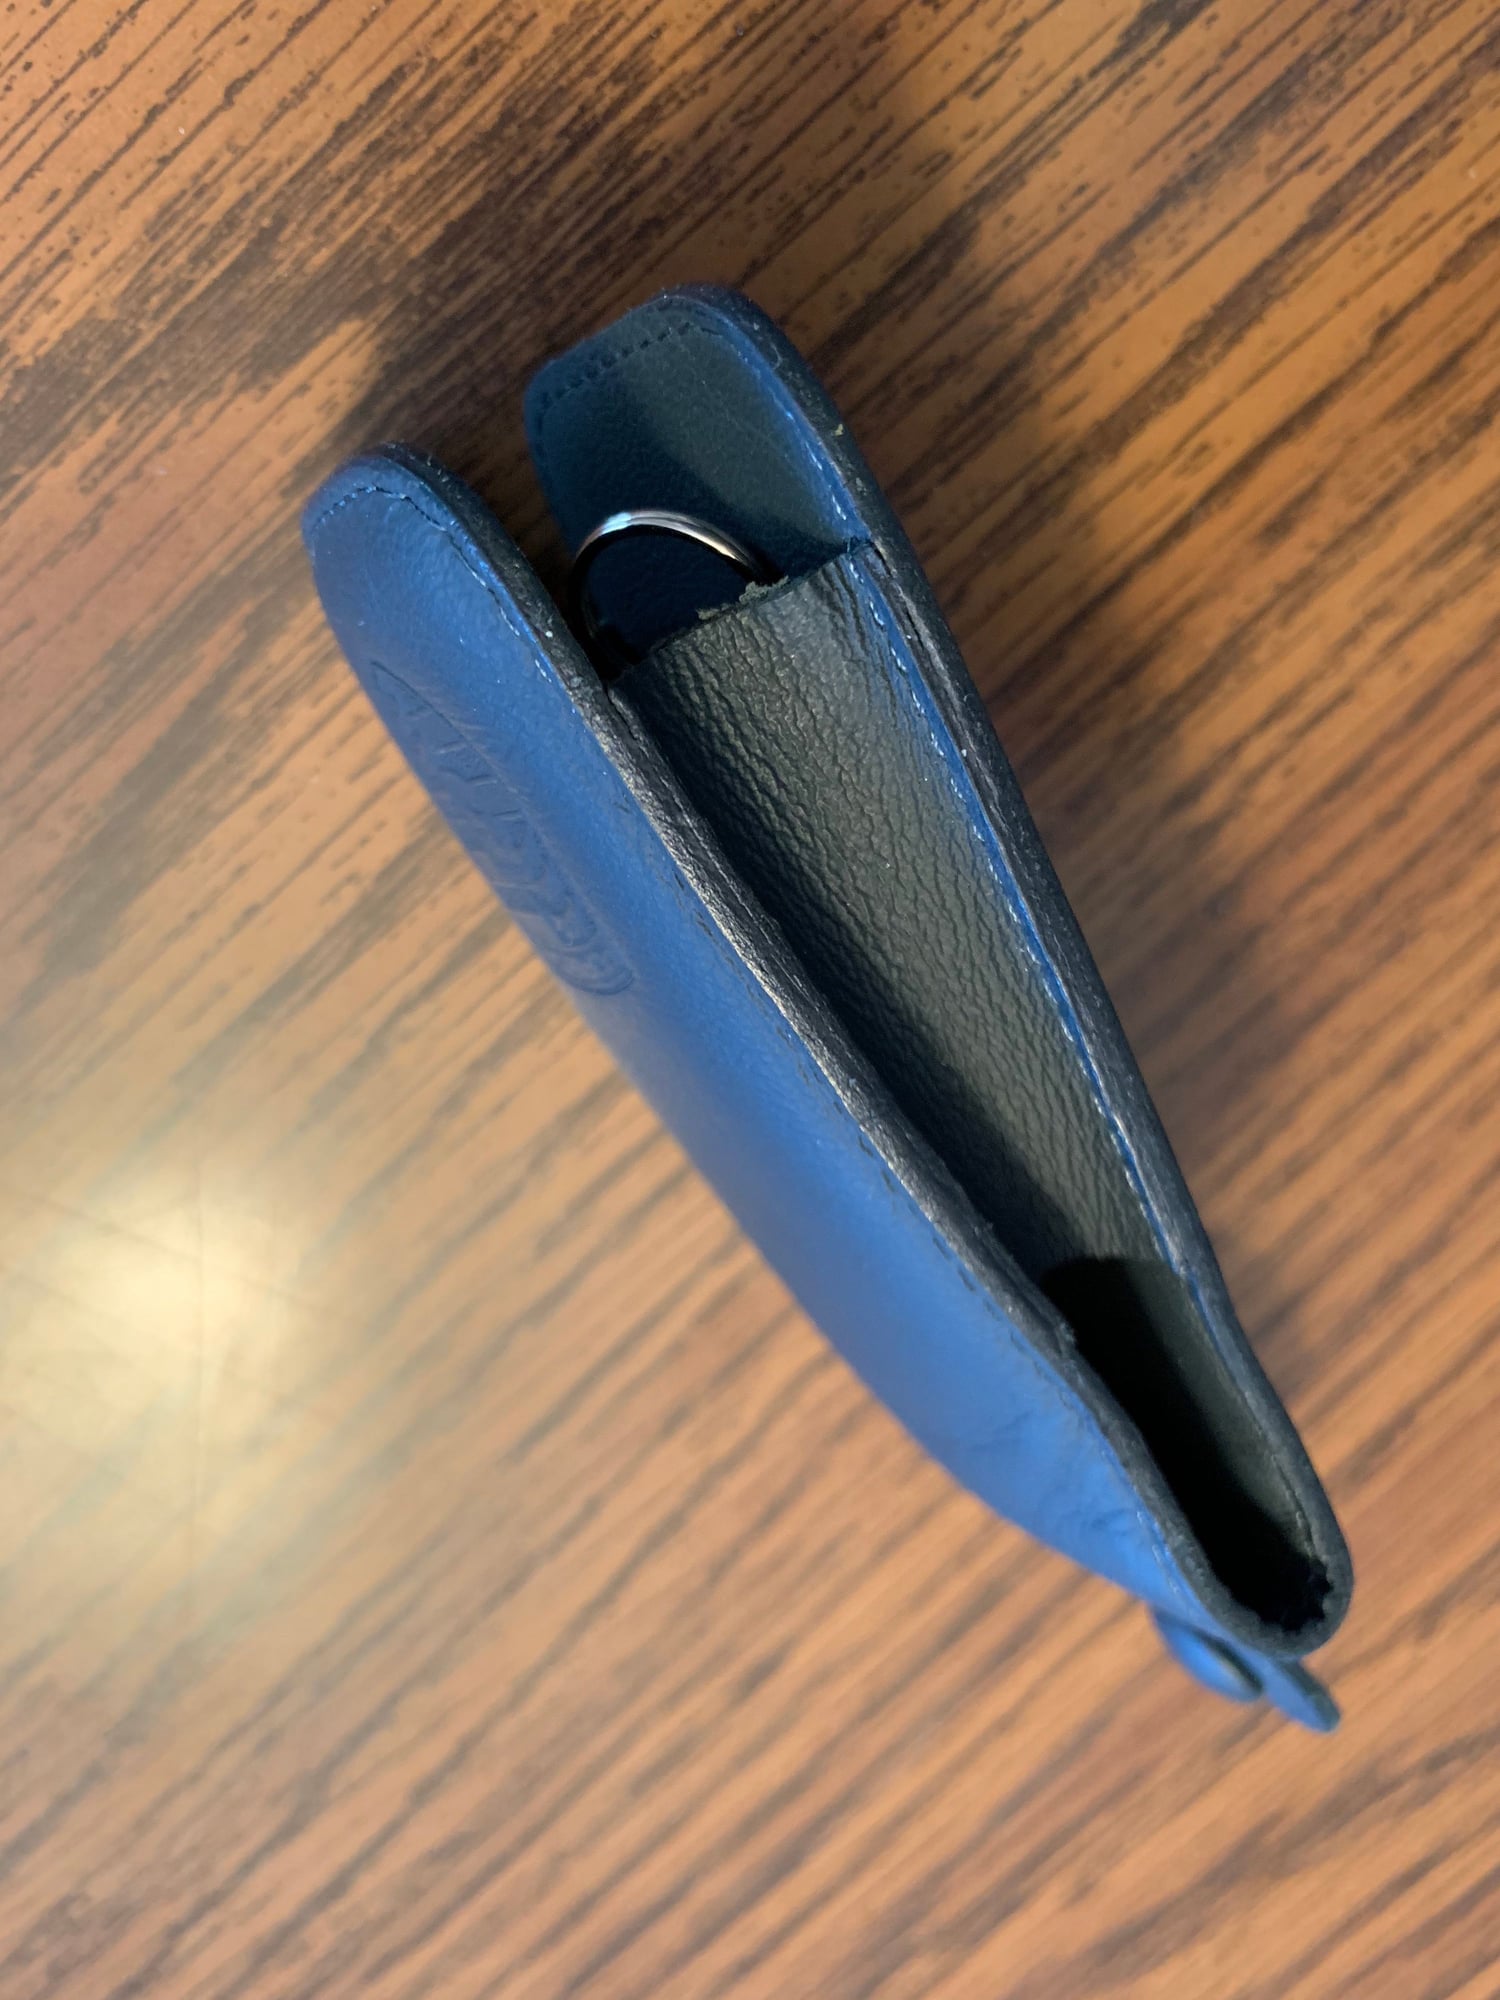 Accessories - Dark Blue Porsche Leather key Pouch - Used - 2011 to 2019 Porsche All Models - Waverly, MN 55390, United States